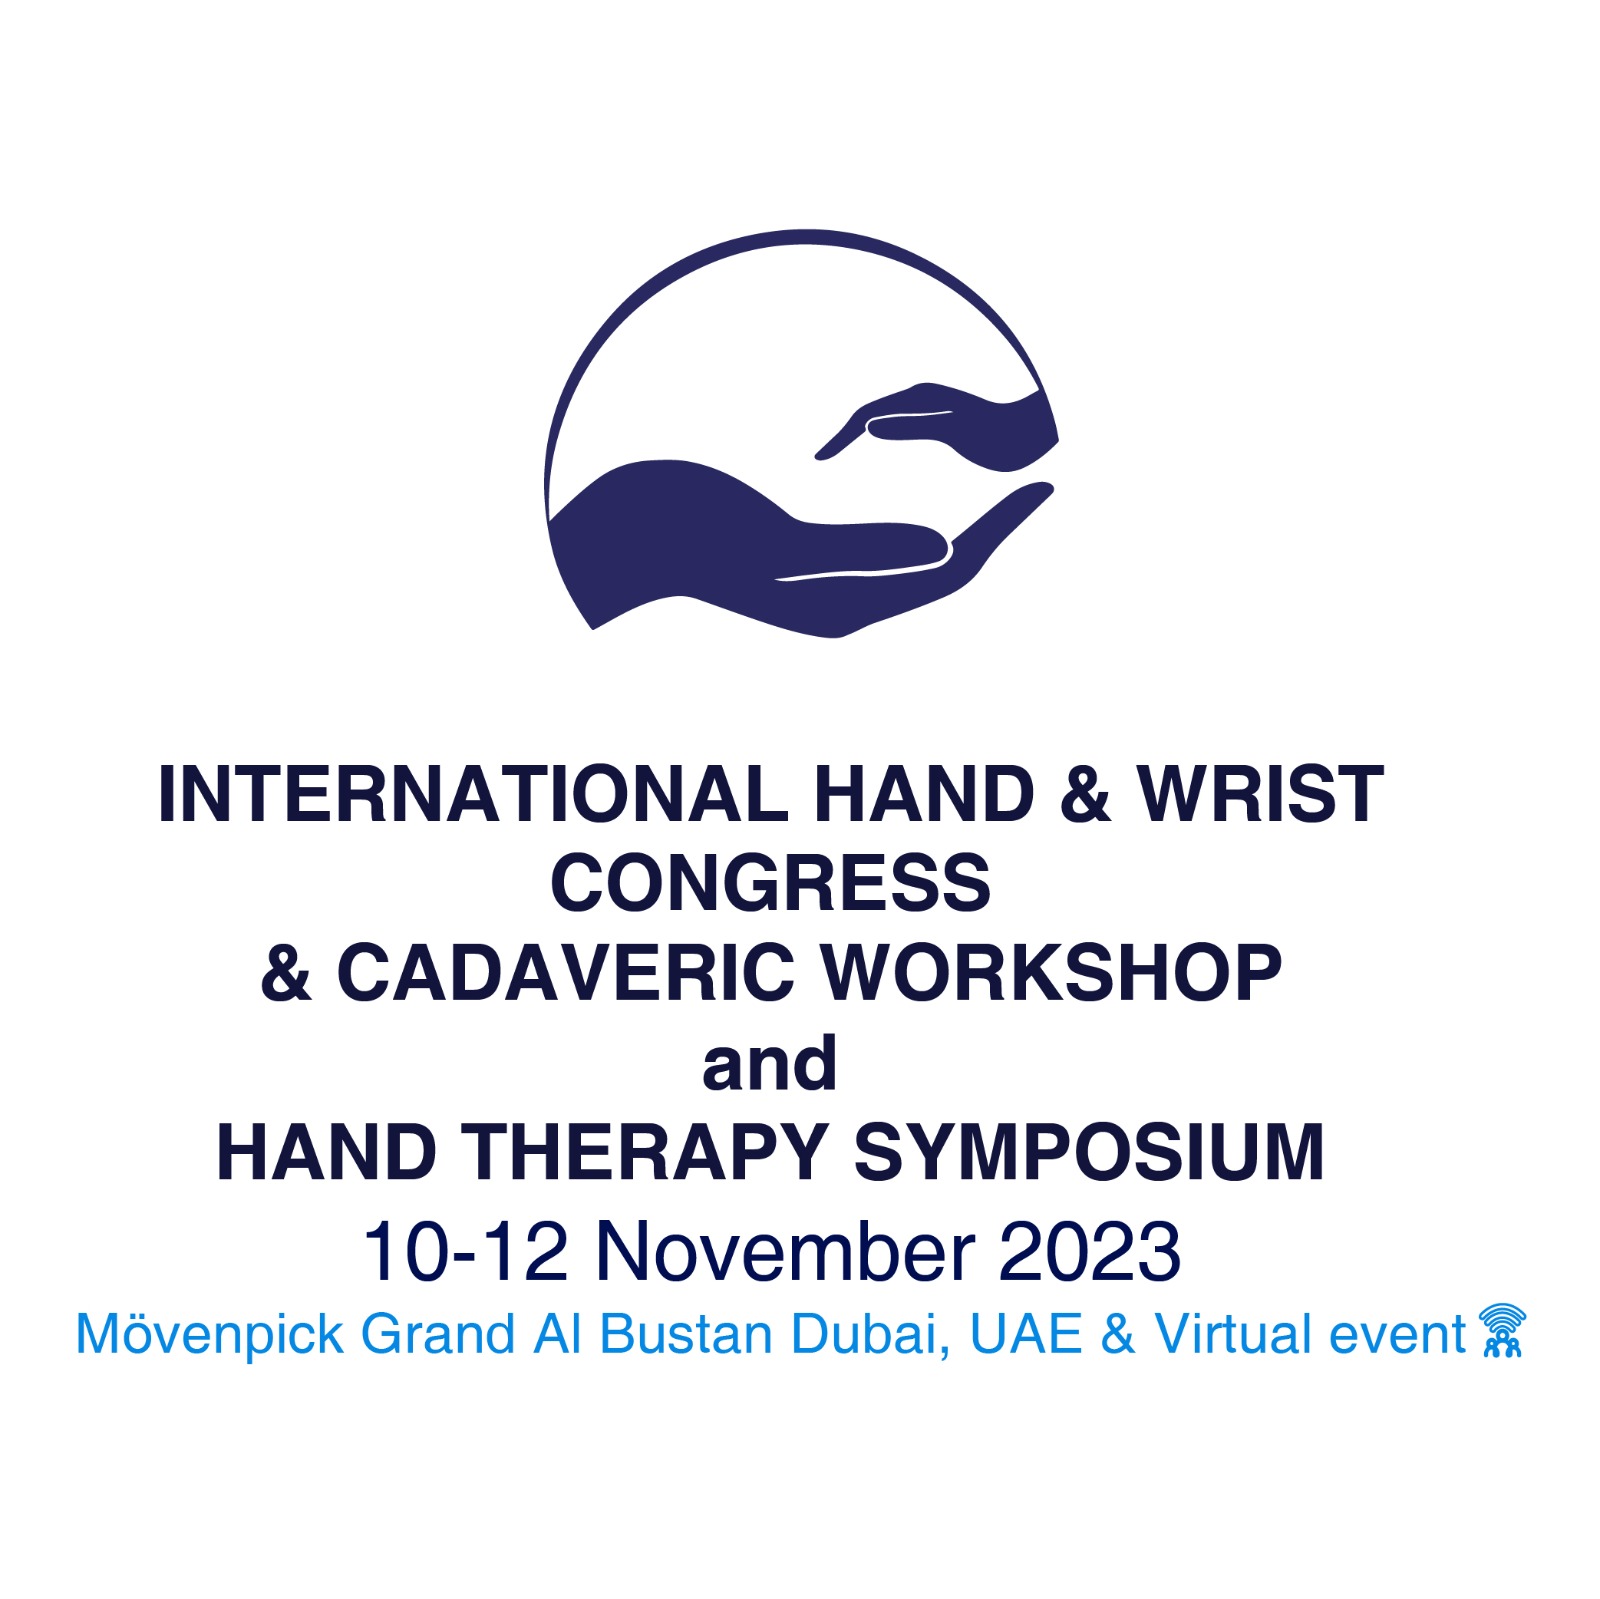 International Hand & Wrist Congress & Cadaveric Workshop and Hand Therapy Symposium